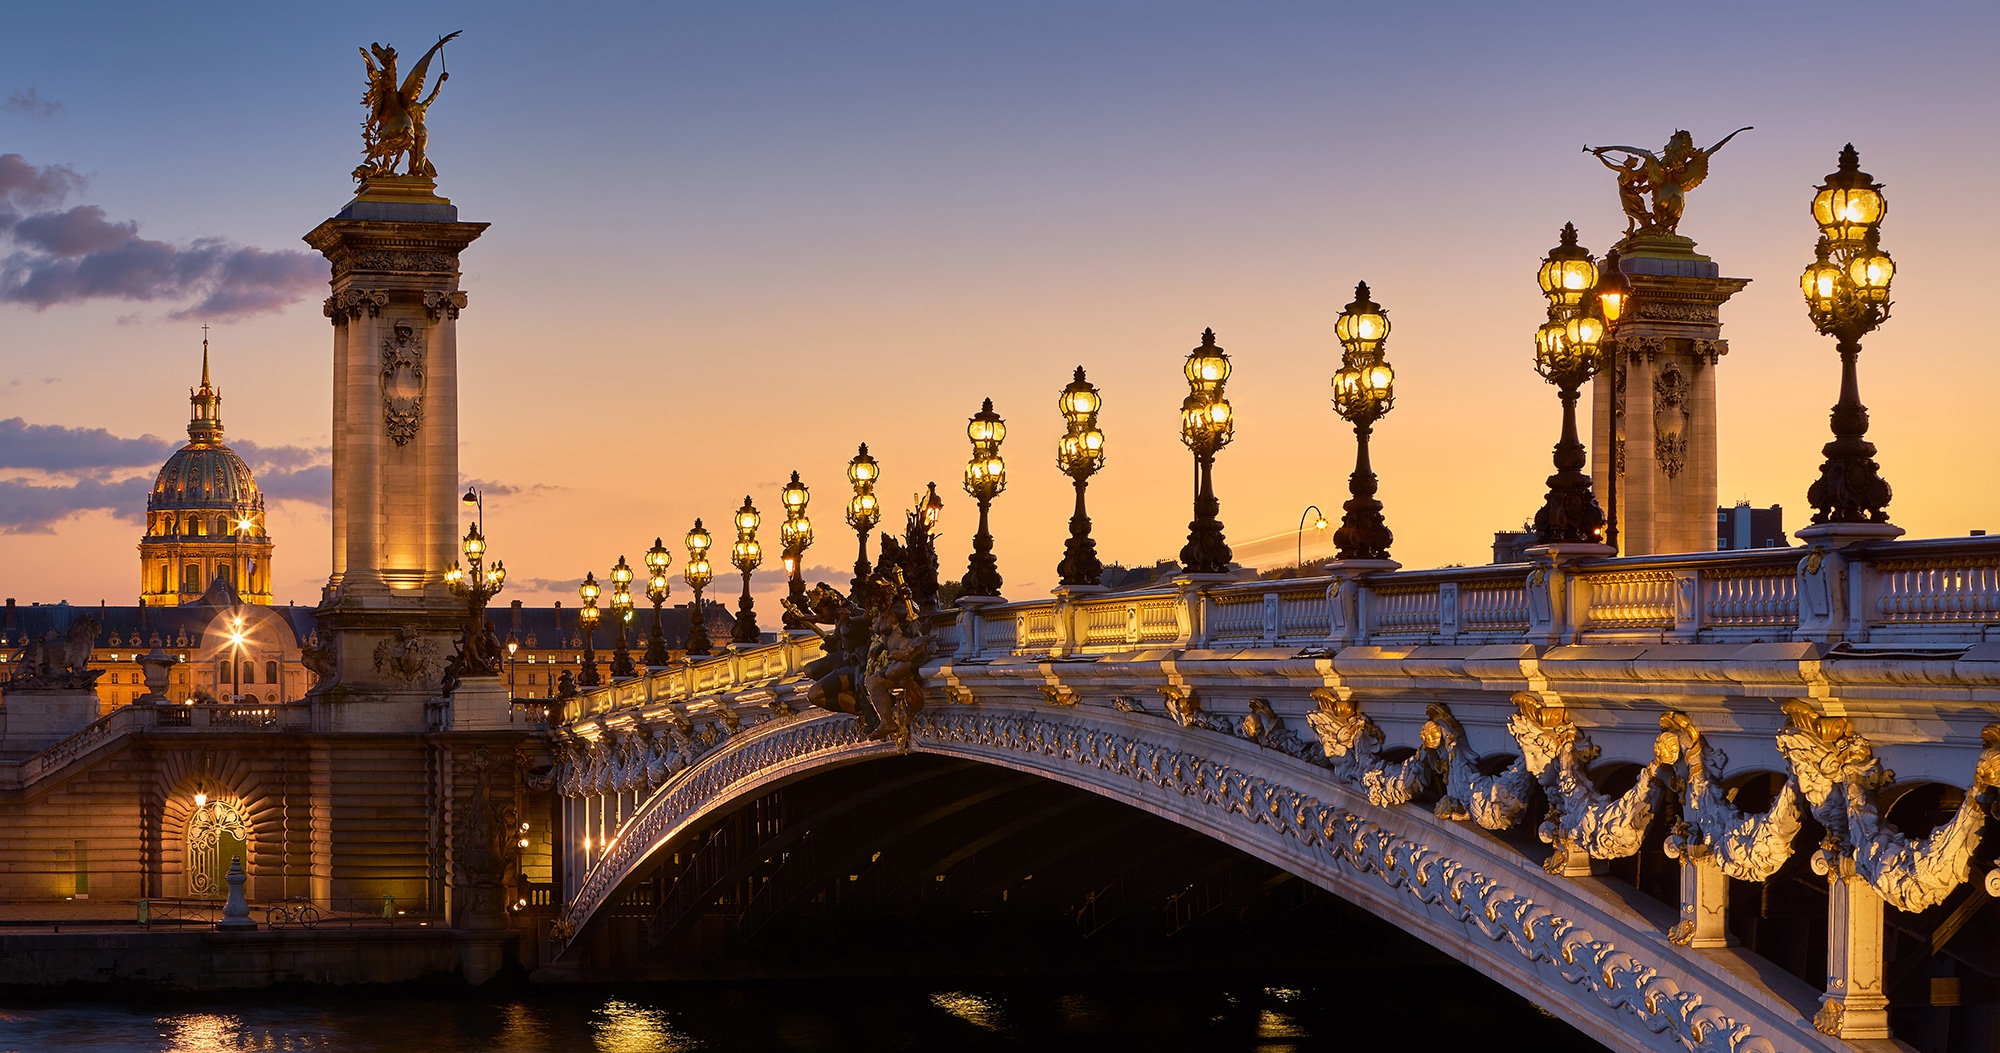 Pont Alexandre III Bridge and illuminated lamp posts at sunset w